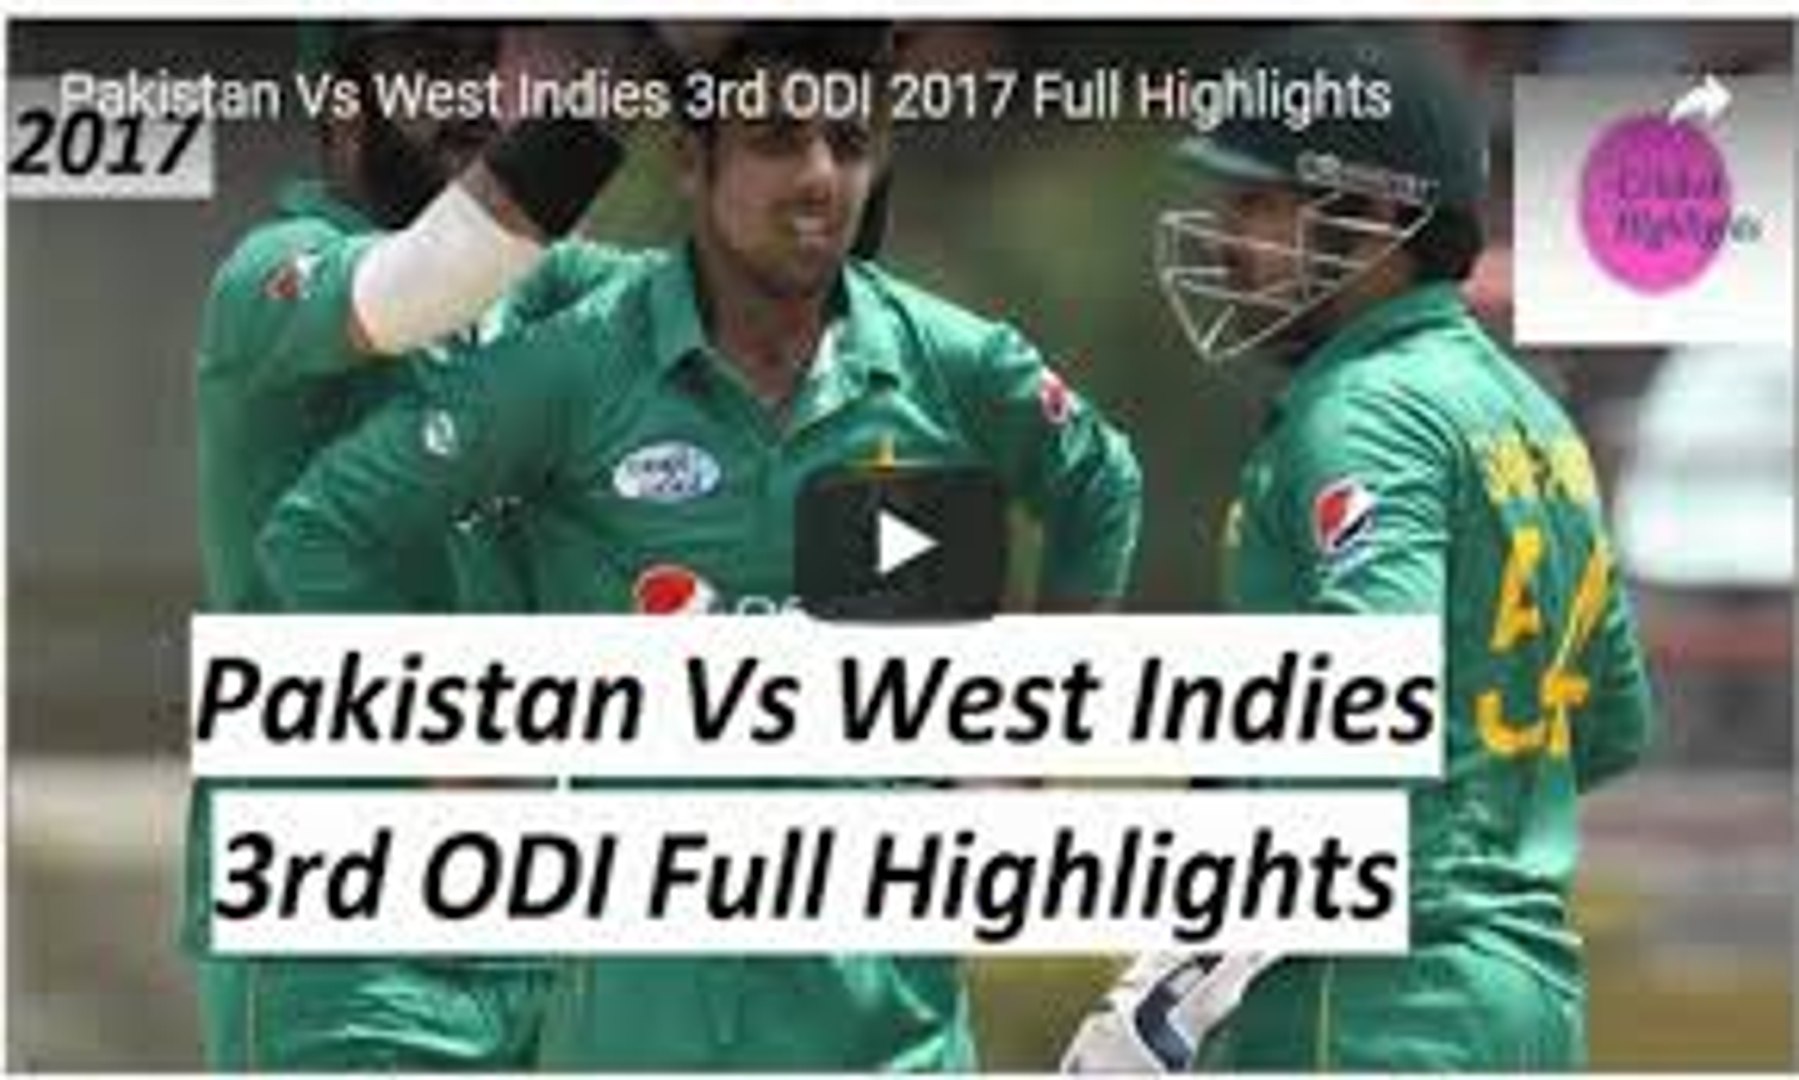 Pakistan vs West Indies 3rd ODI Full HD Highlights